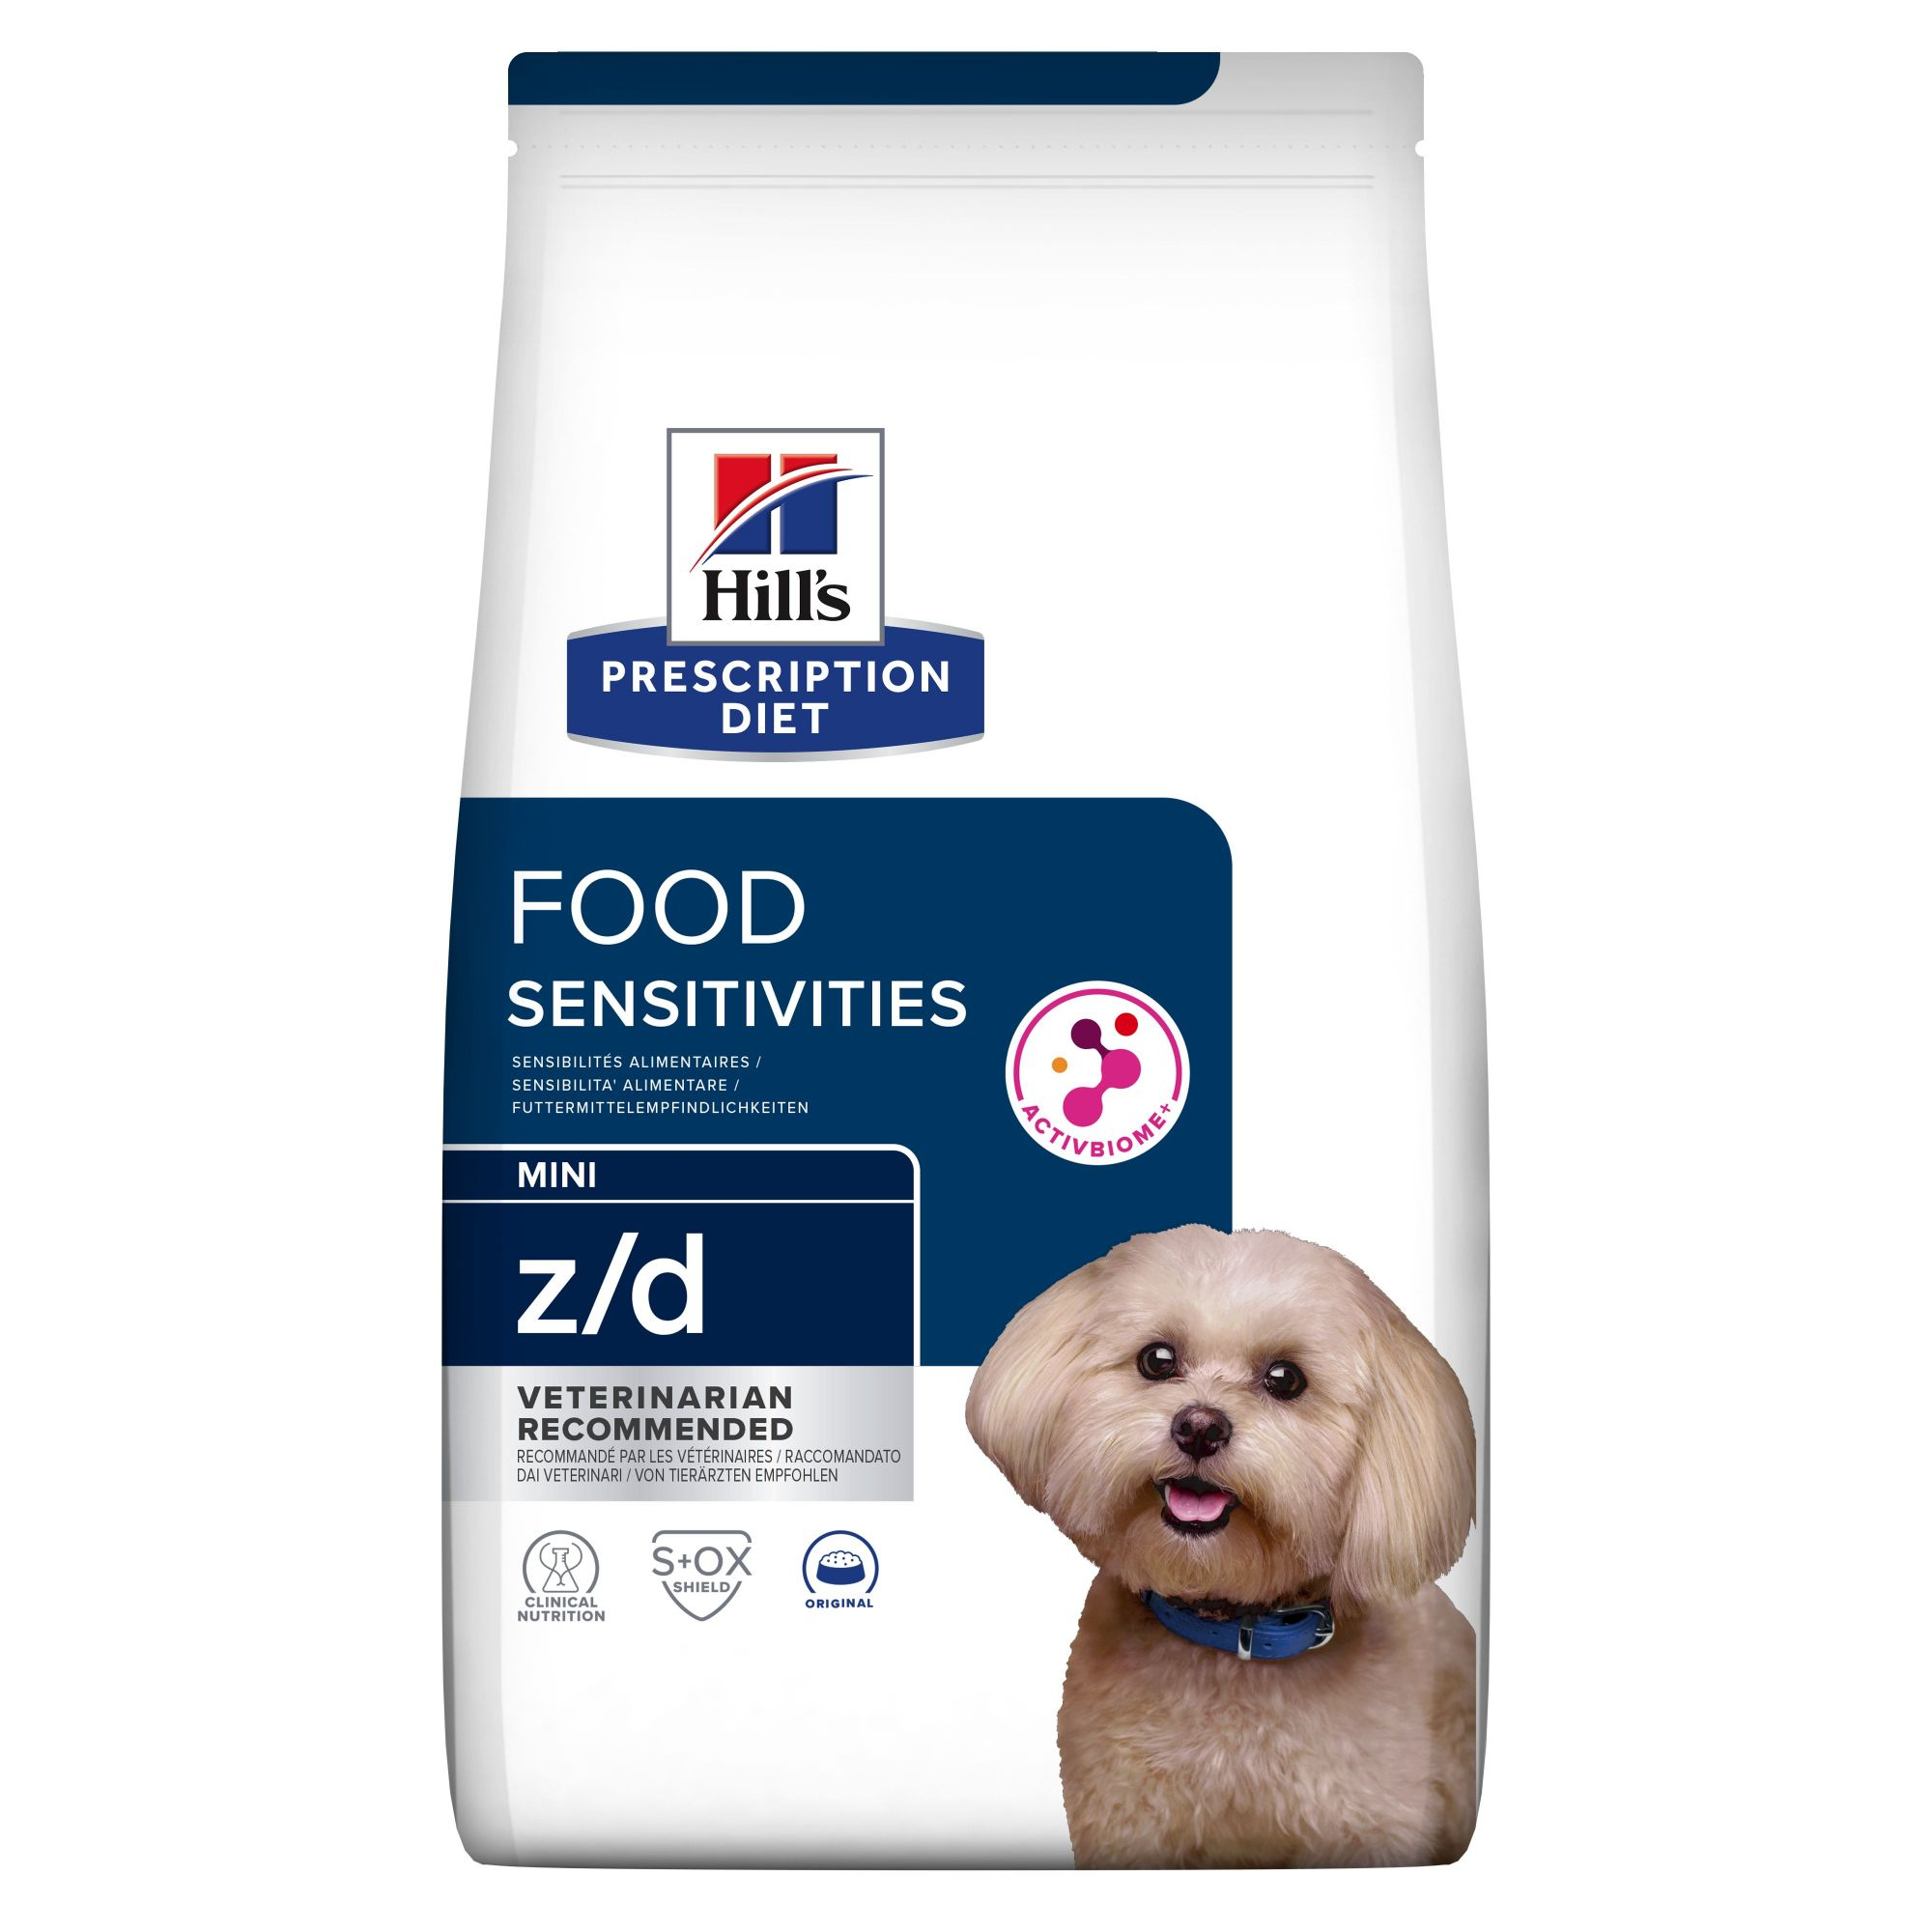 Hill's Prescription Diet z/d Food Sensitivities Mini Ração para Cão pequeno